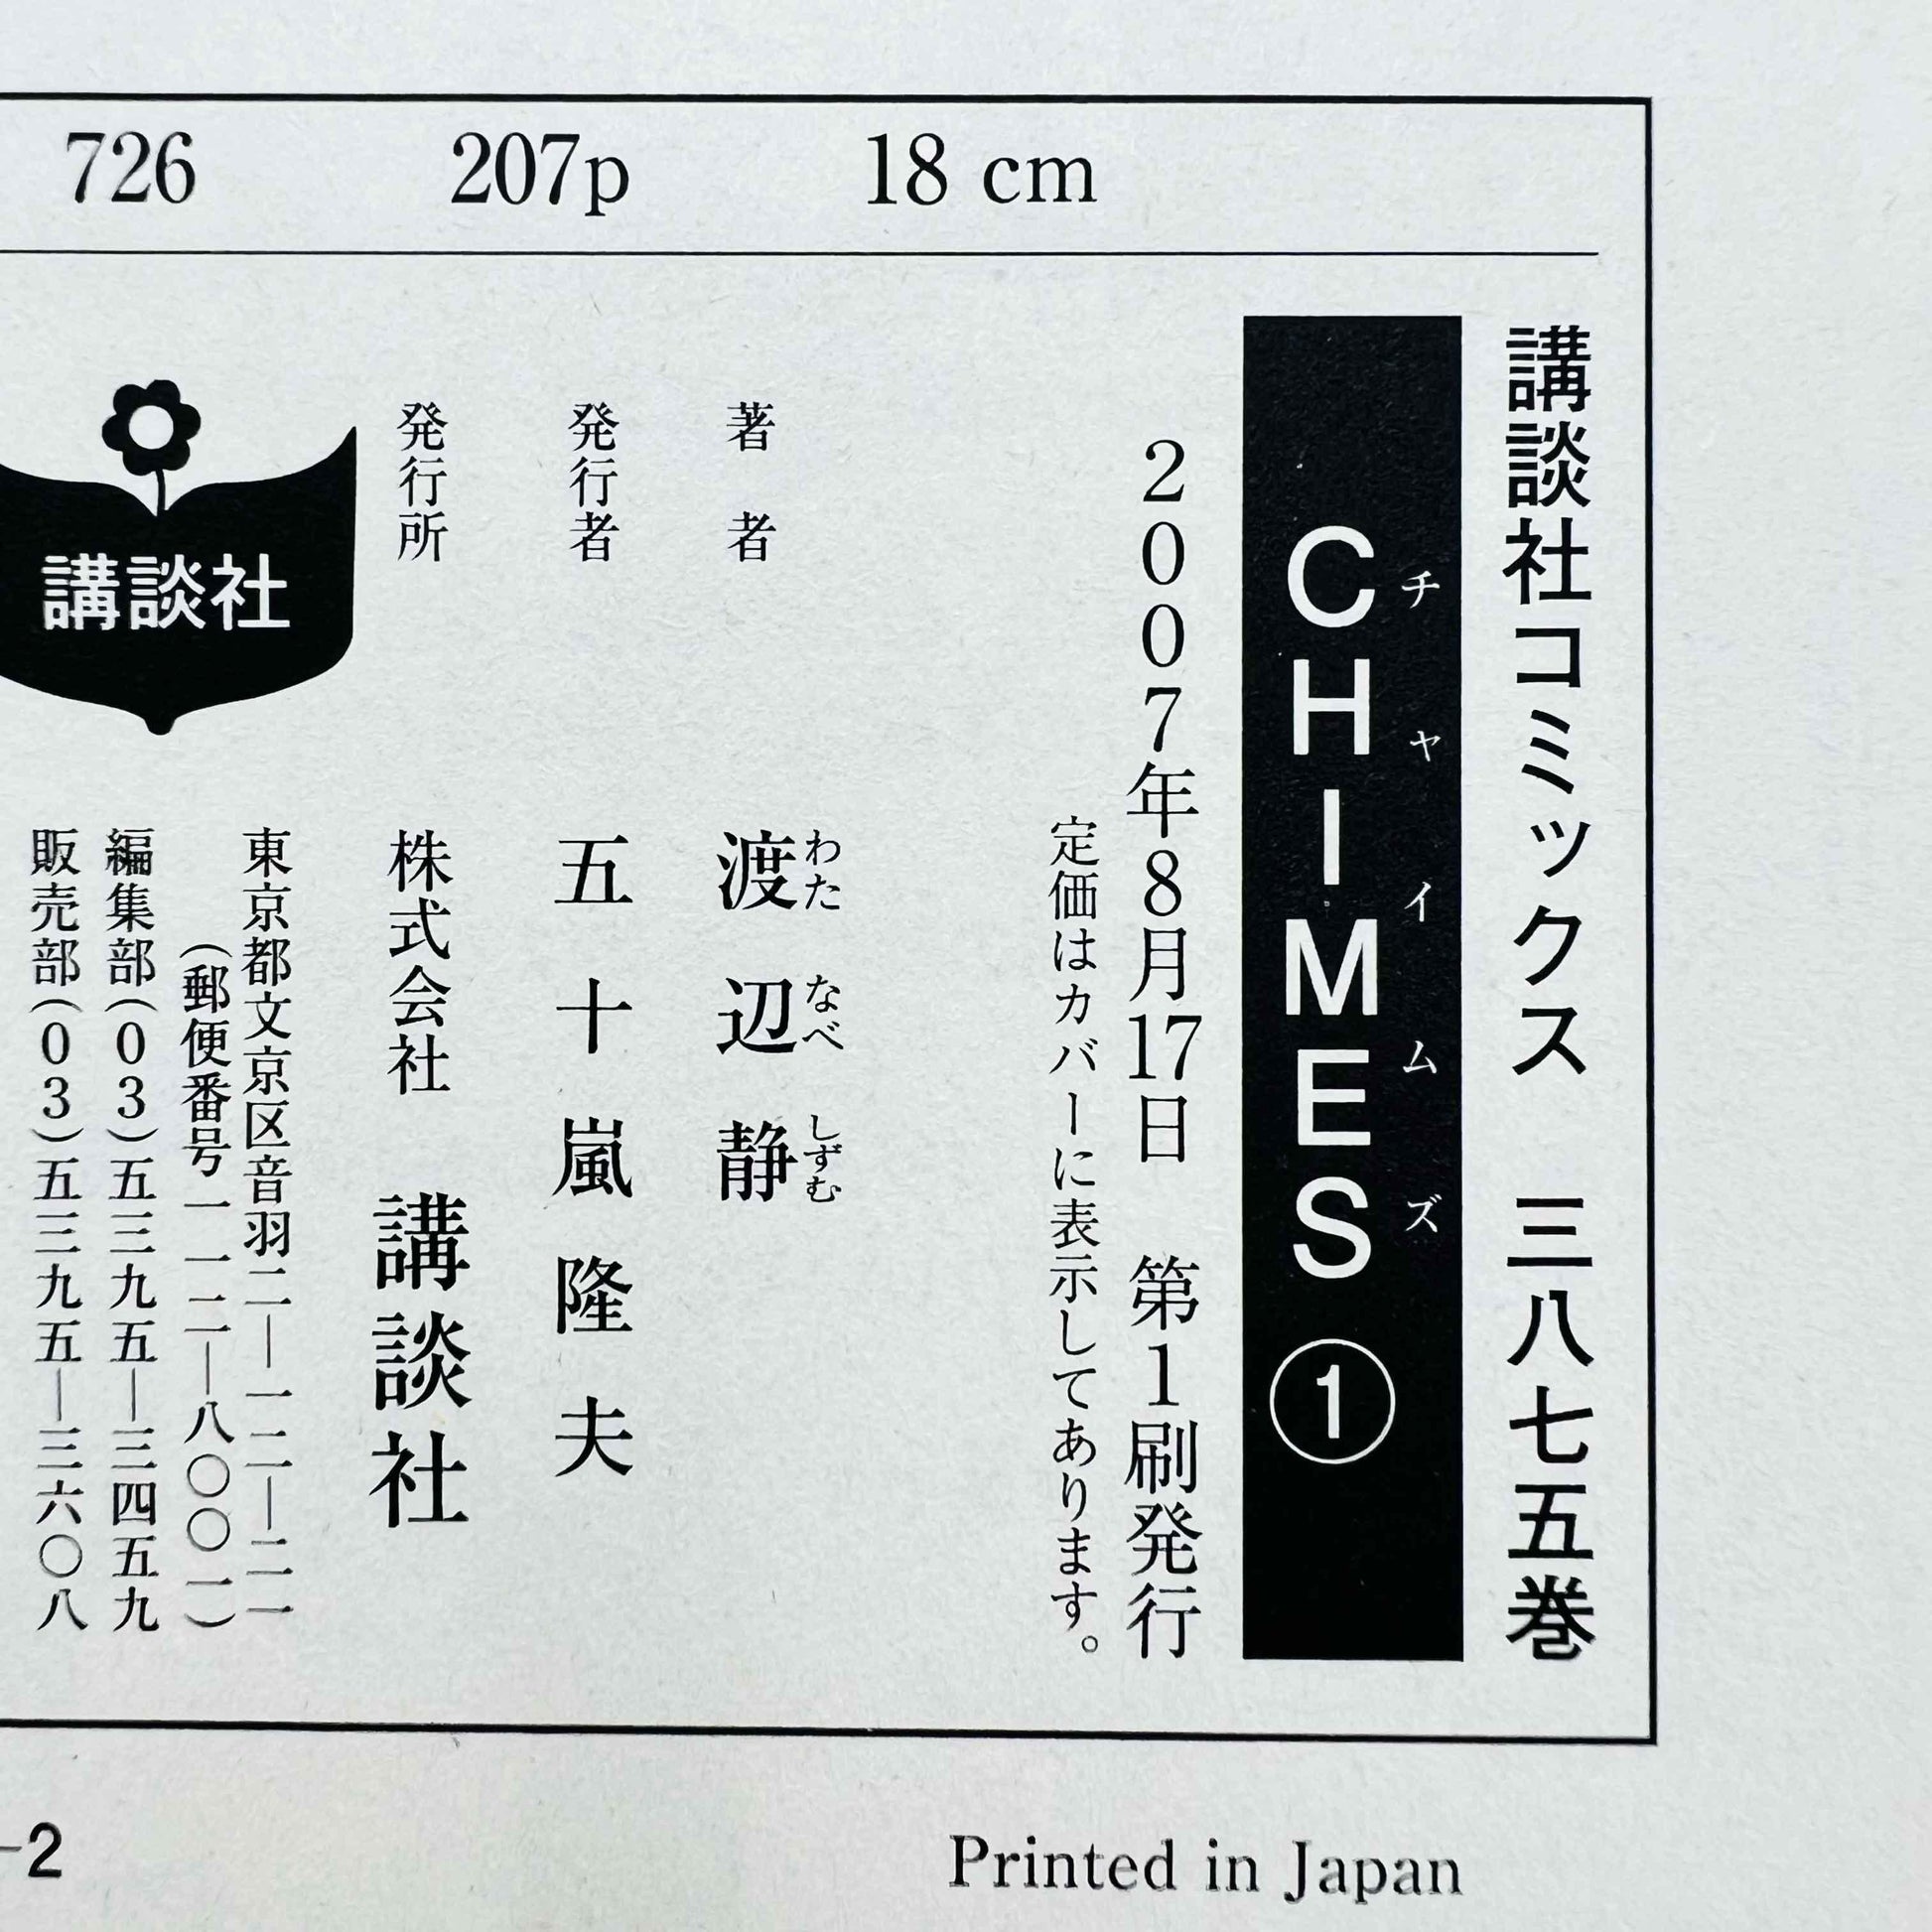 Chimes - Volume 01 - 1stPrint.net - 1st First Print Edition Manga Store - M-CHIMES-01-001